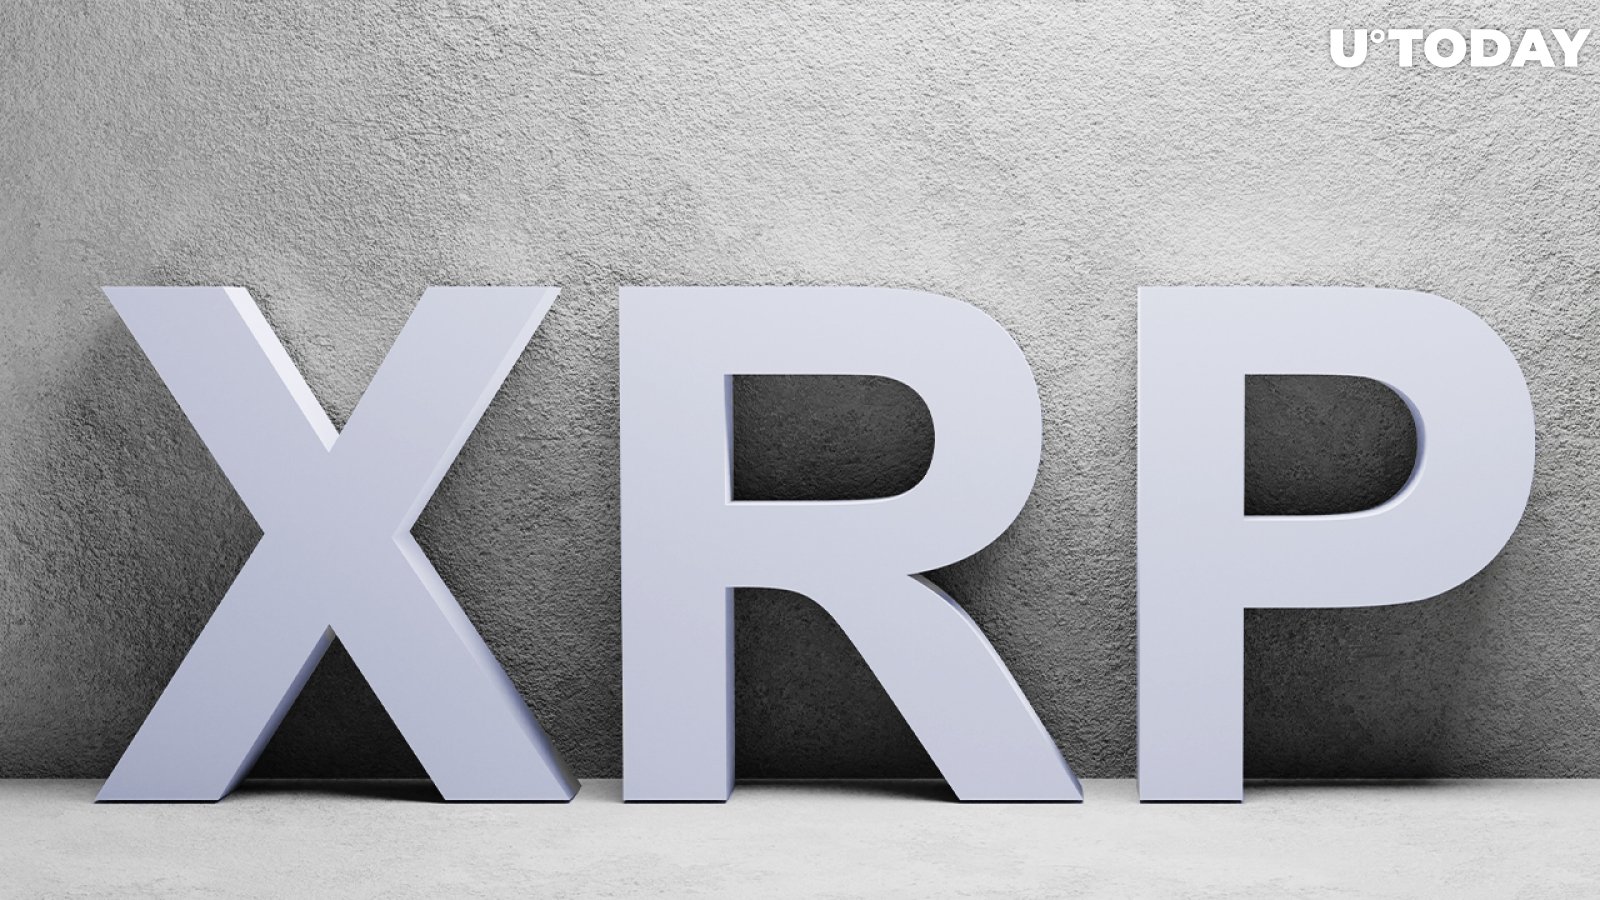 XRP Remains Up 60% This Year Despite SEC Drama